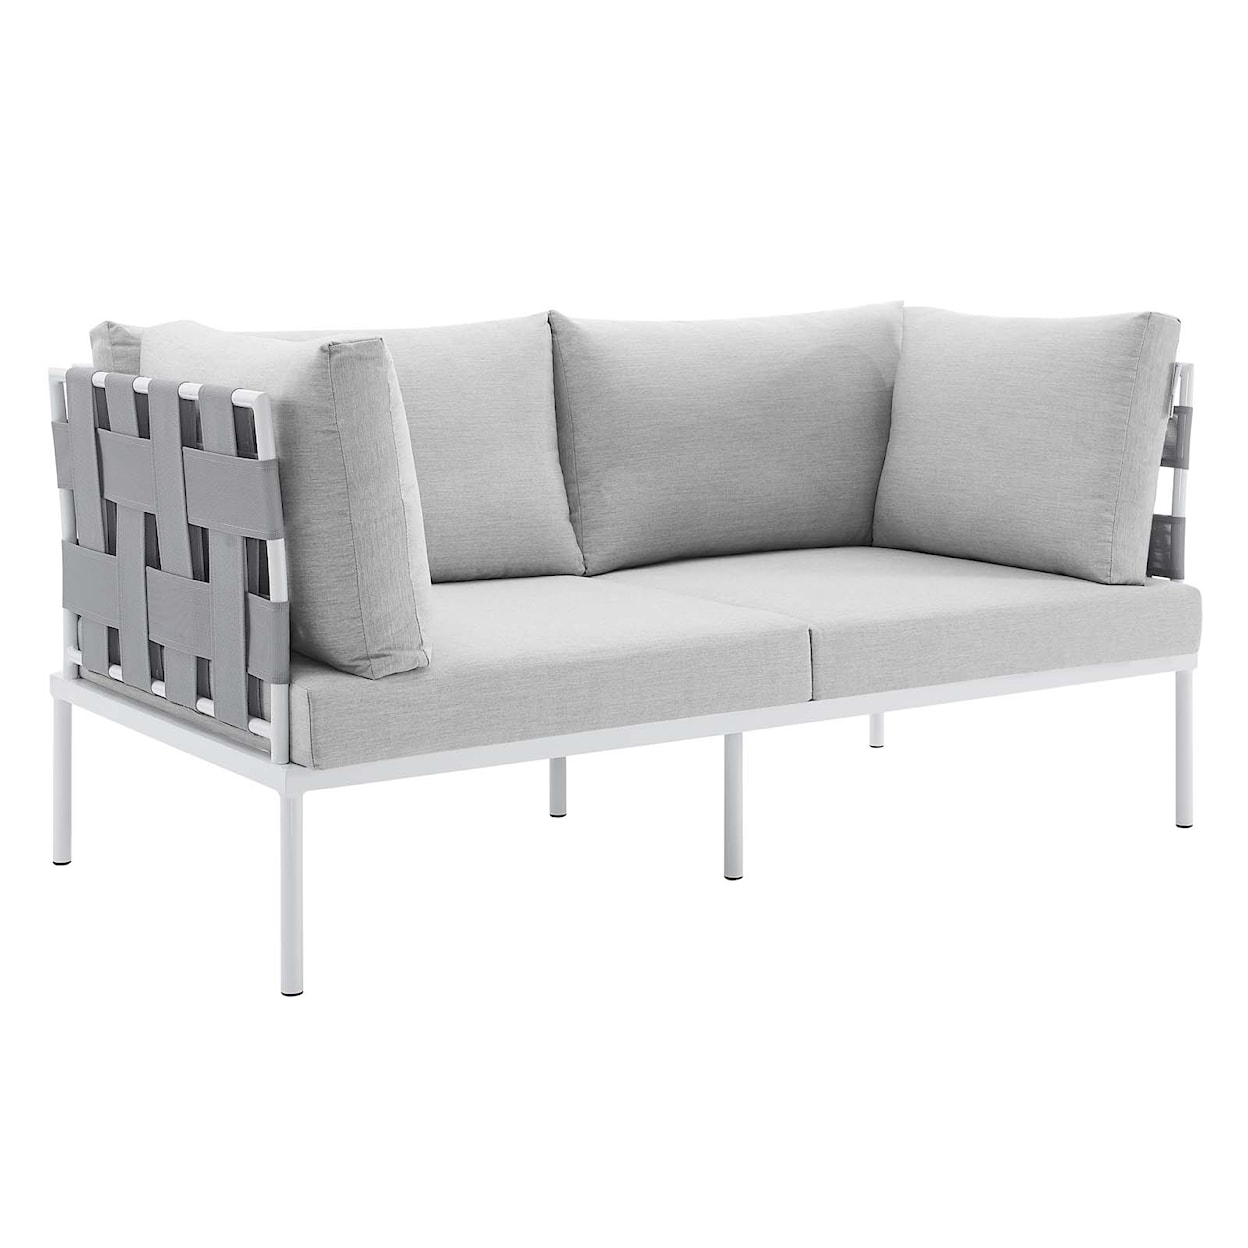 Modway Harmony Outdoor 5-Piece Aluminum Furniture Set